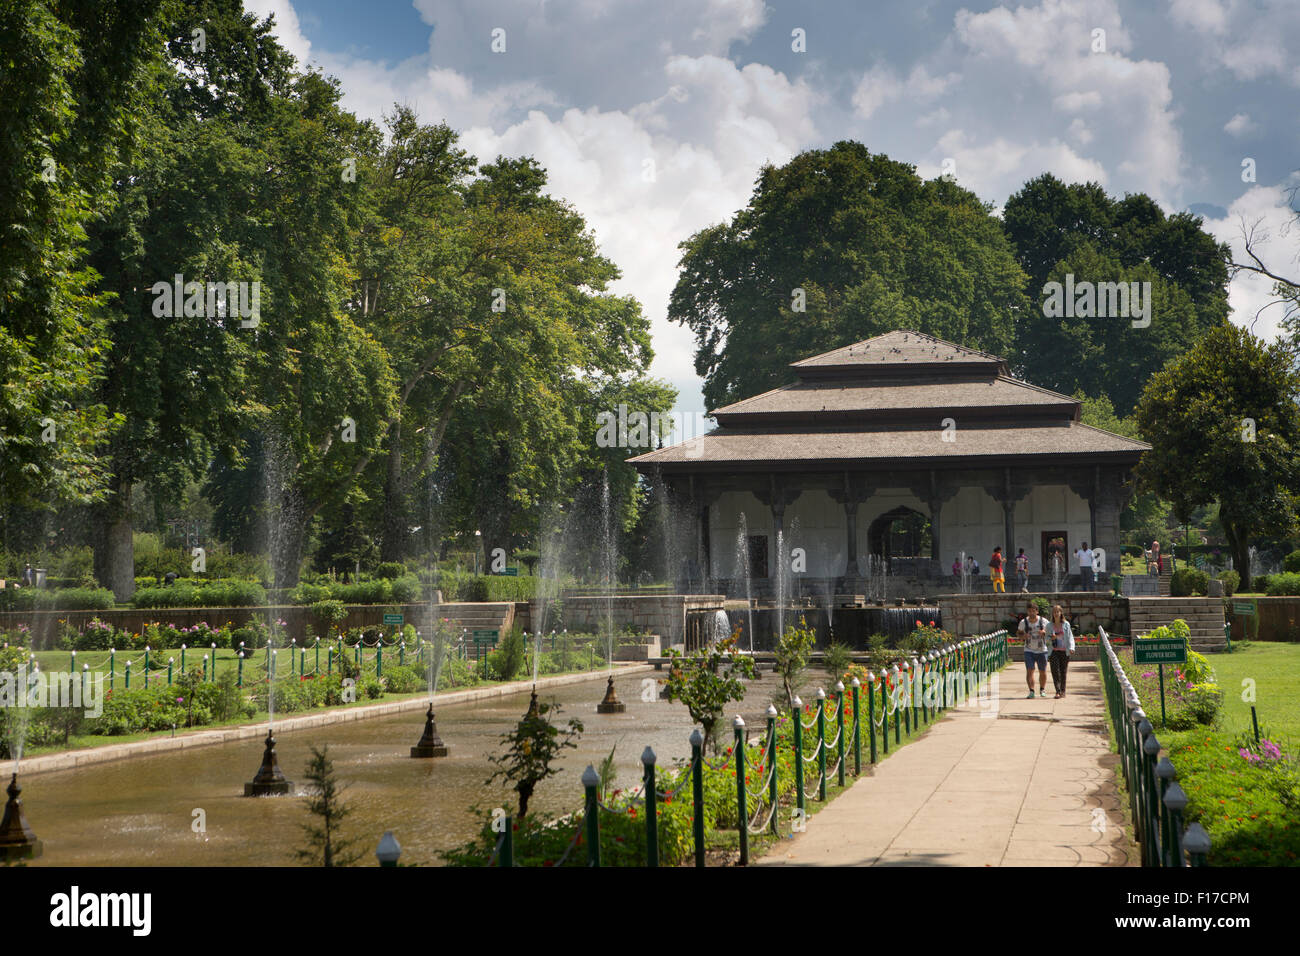 India, Jammu & Kashmir, Srinagar, Shalimar Bagh, Mughal Garden built by Emperor Jehangir, fountains at Diwan-i-Khas Stock Photo